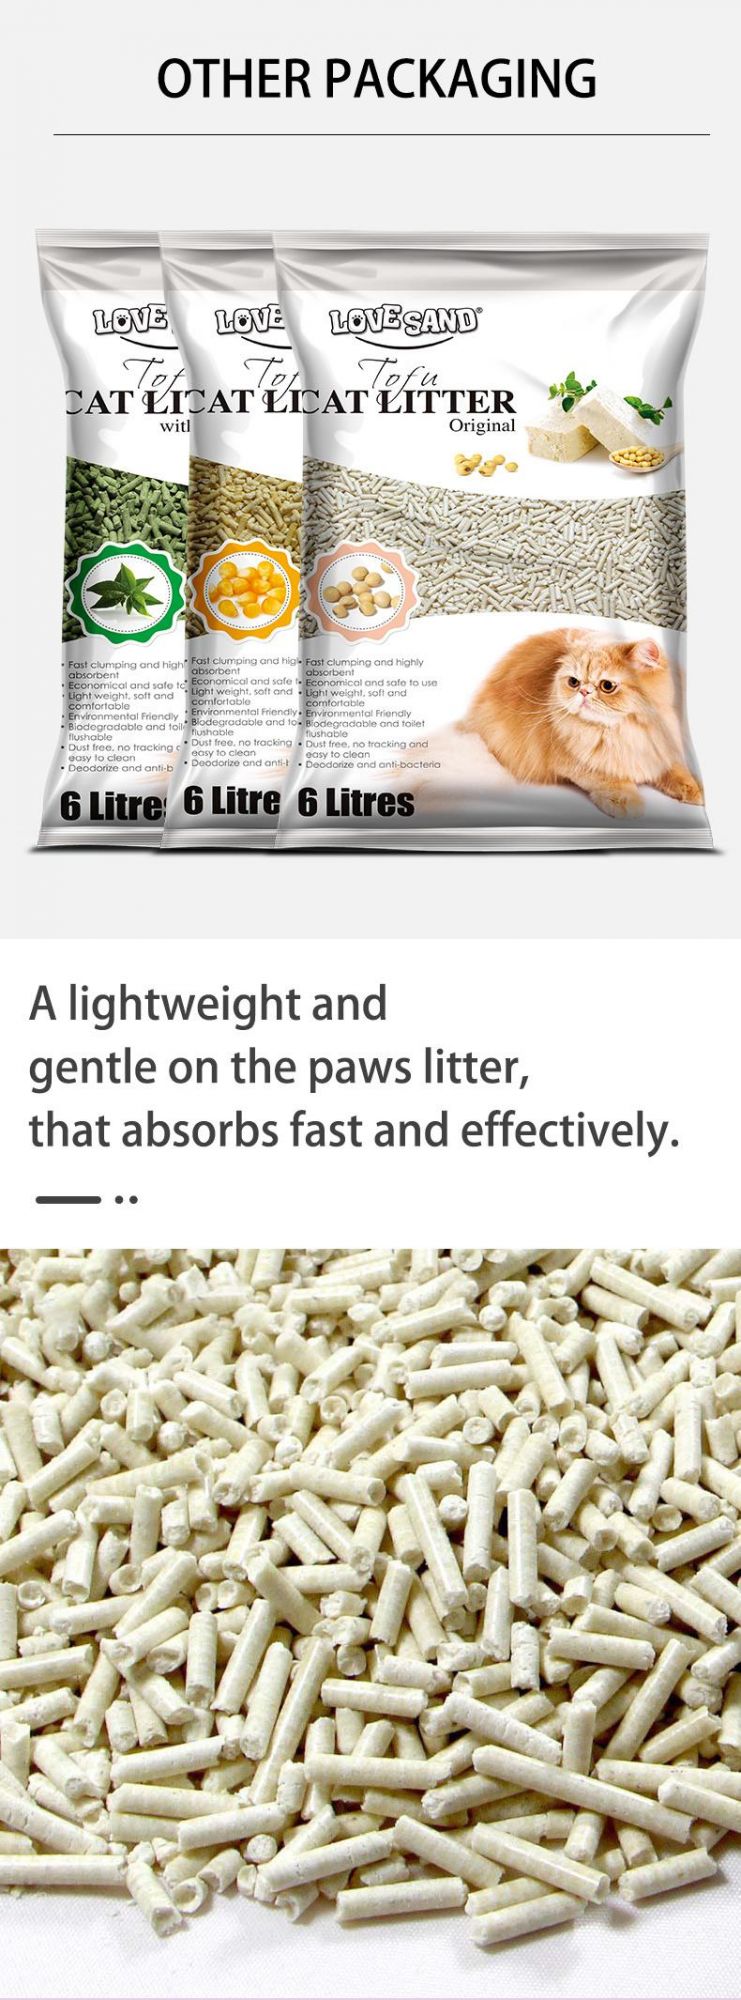 Py-Pets Pet Supply Plant Strawberry Cat Litter Pet Product